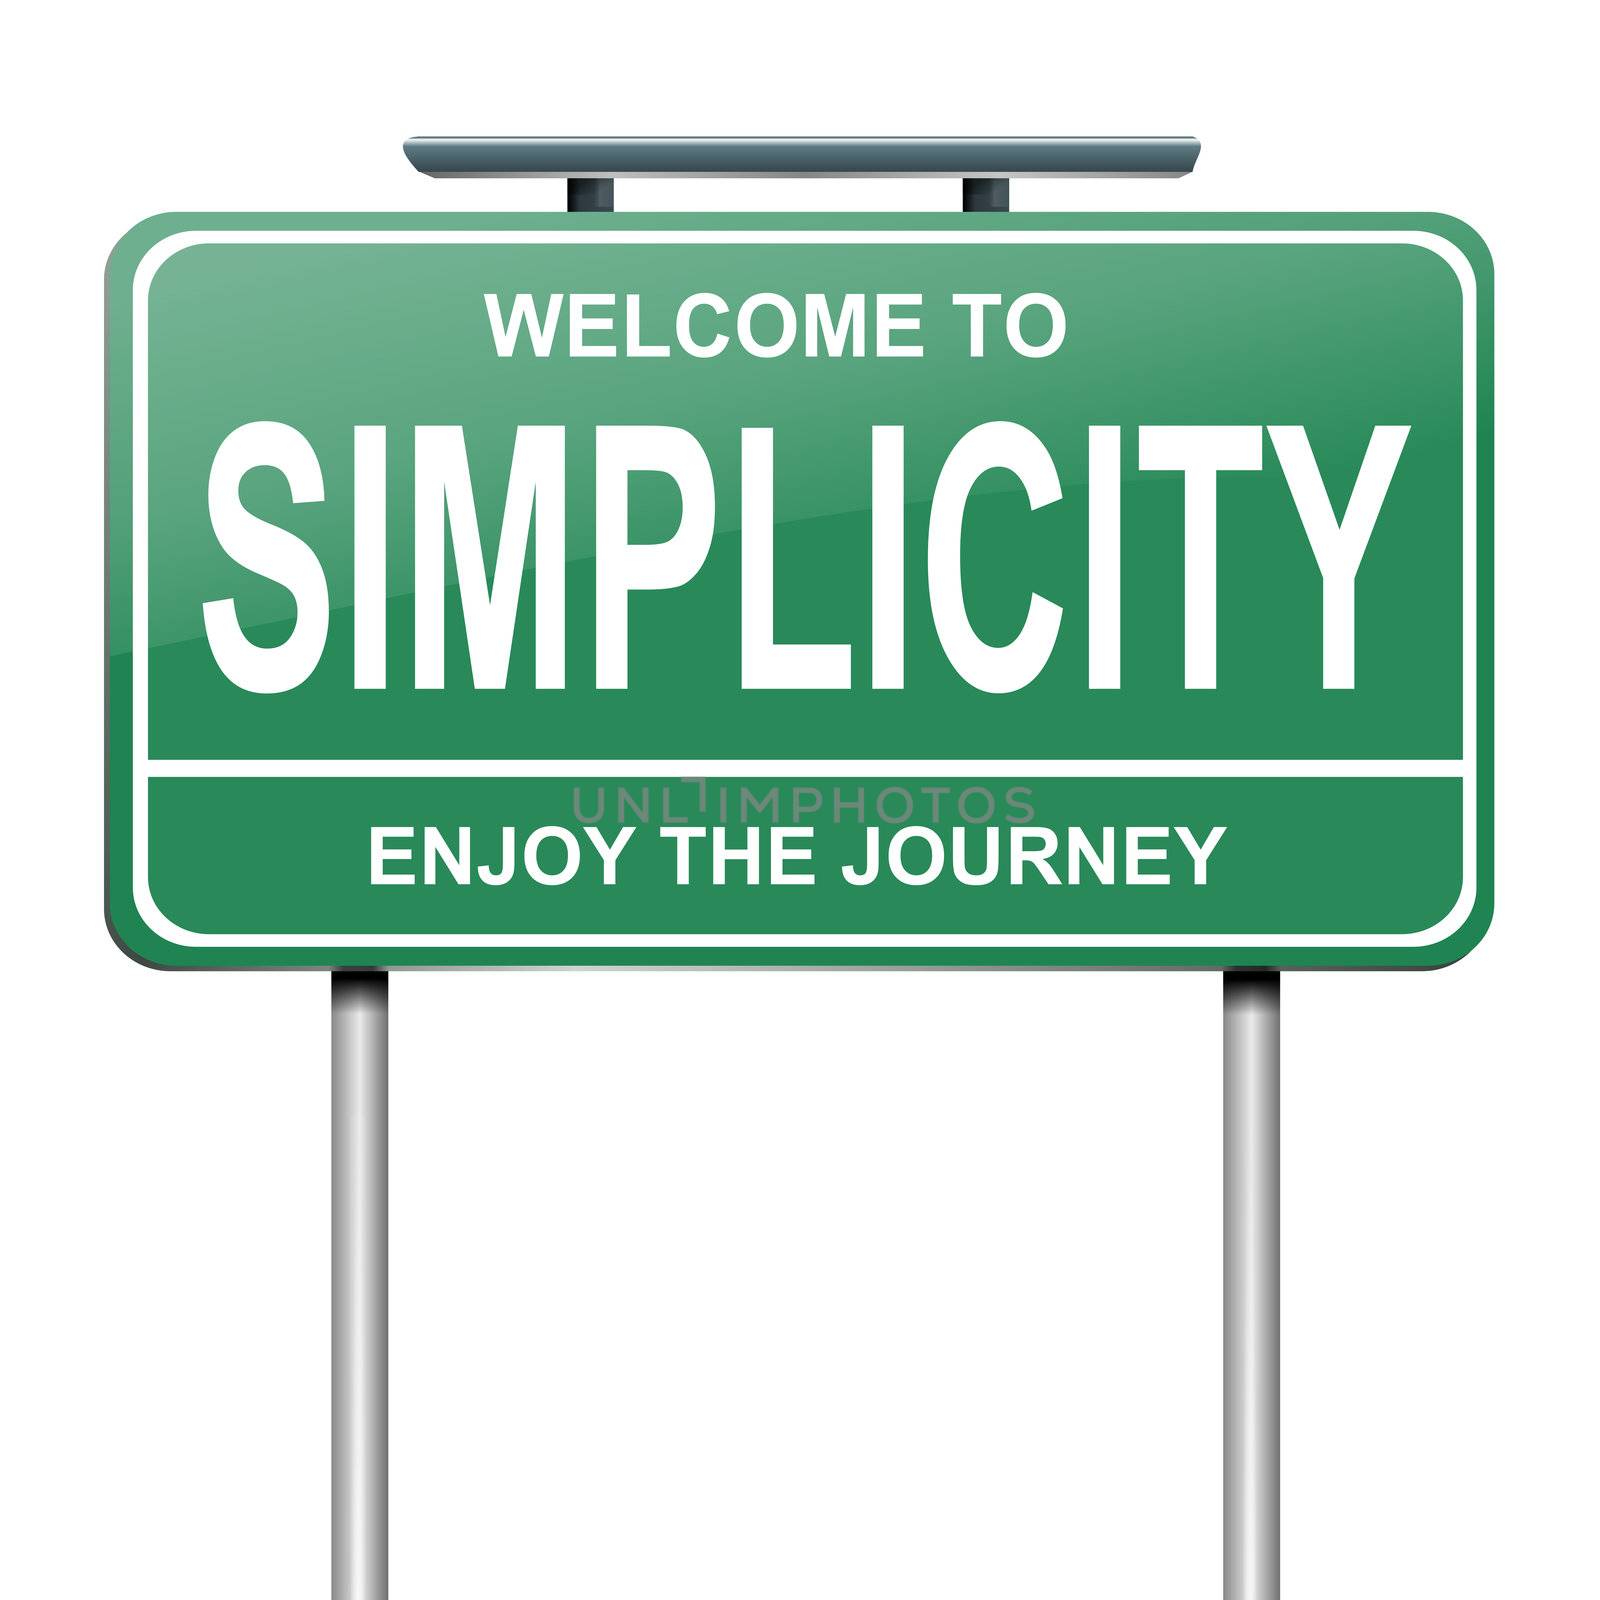 Simplicity concept. by 72soul